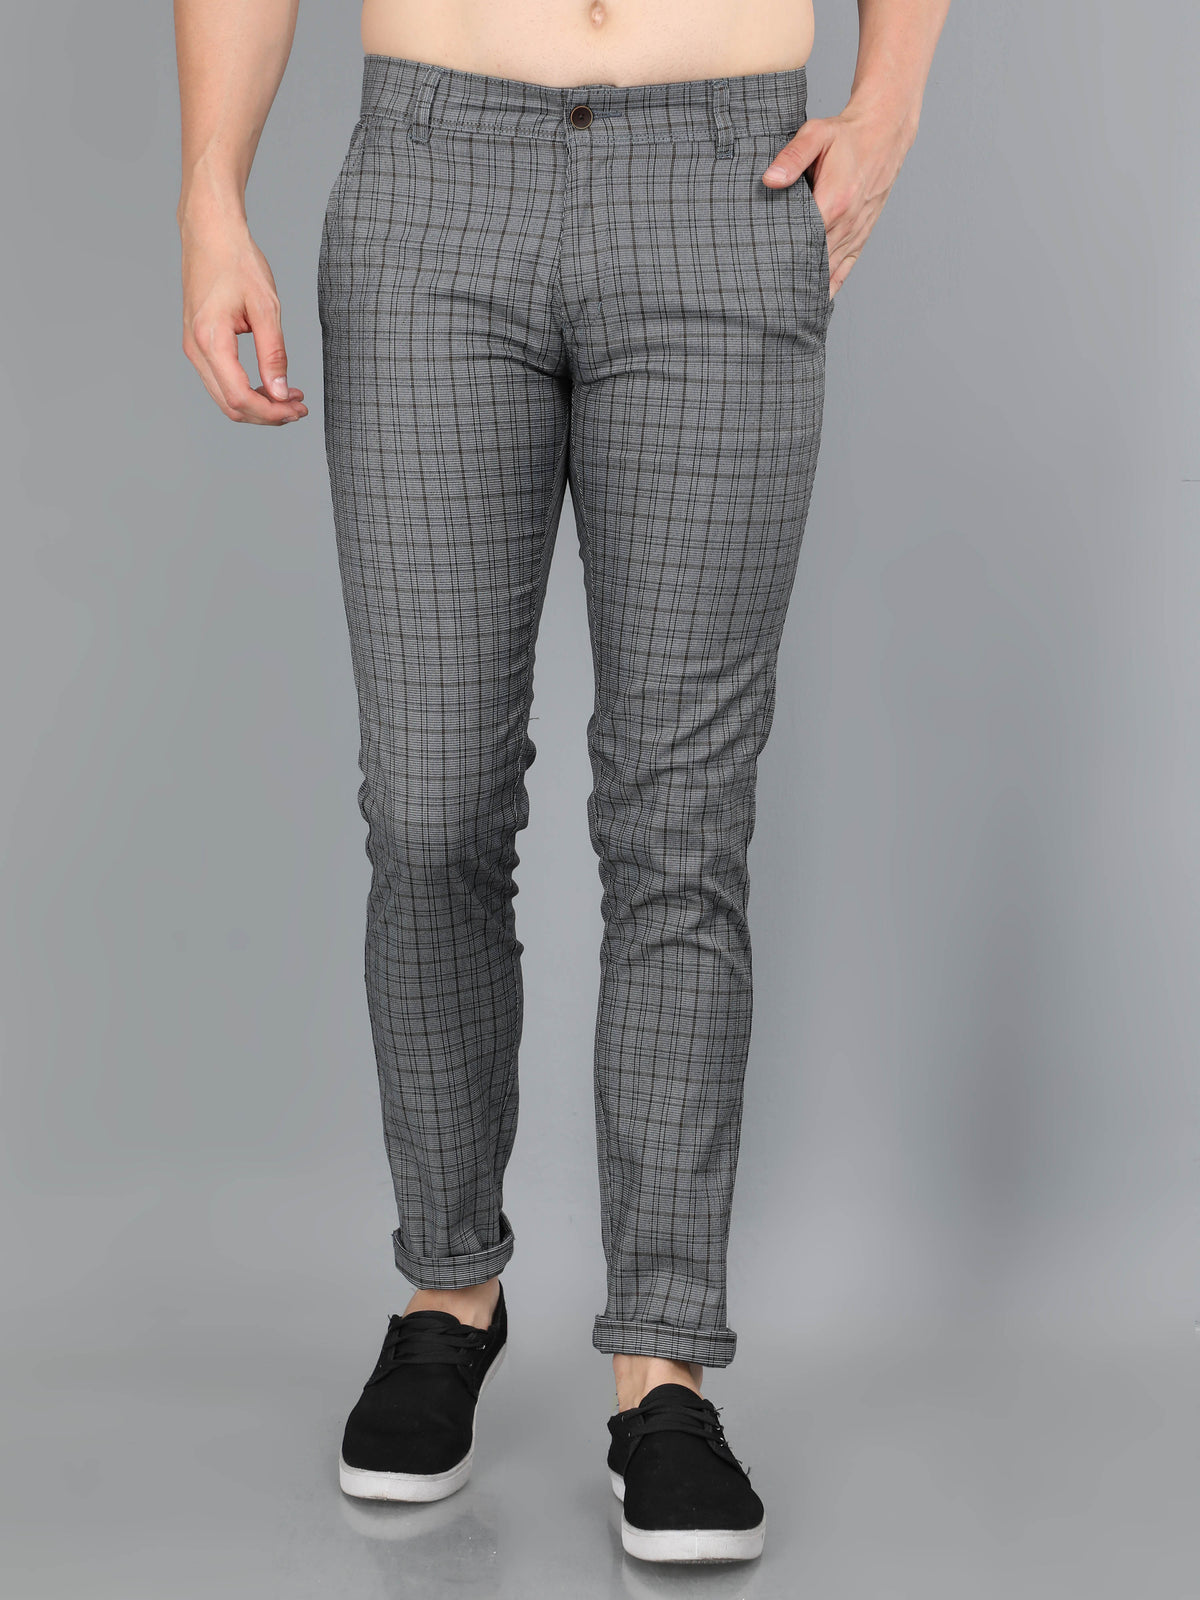 Grey Checks Stretchable Lean Fit Trouser